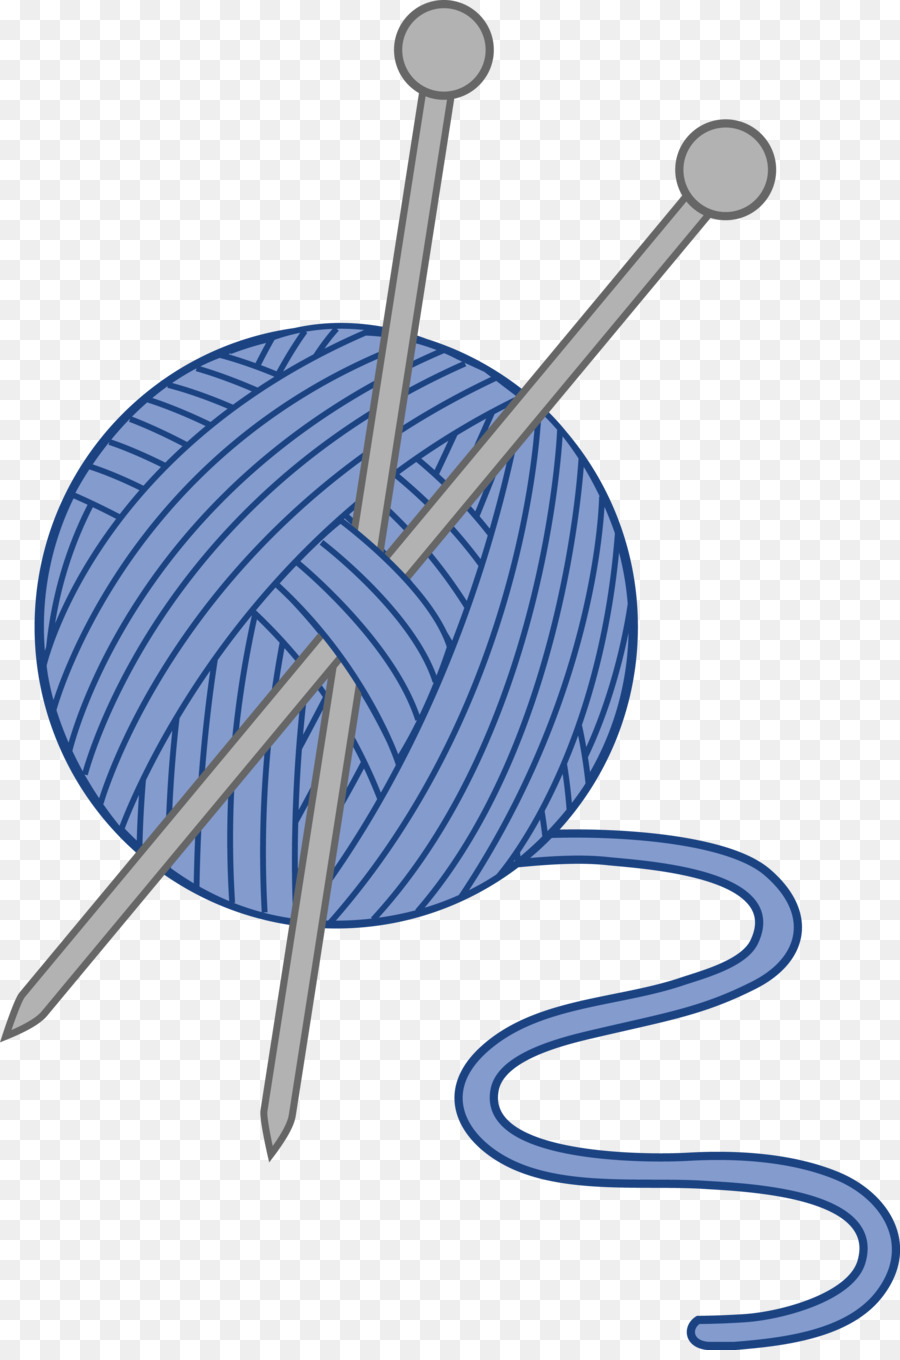 Knitting Needles Clipart Knitting Needle Hand Sewing Needles